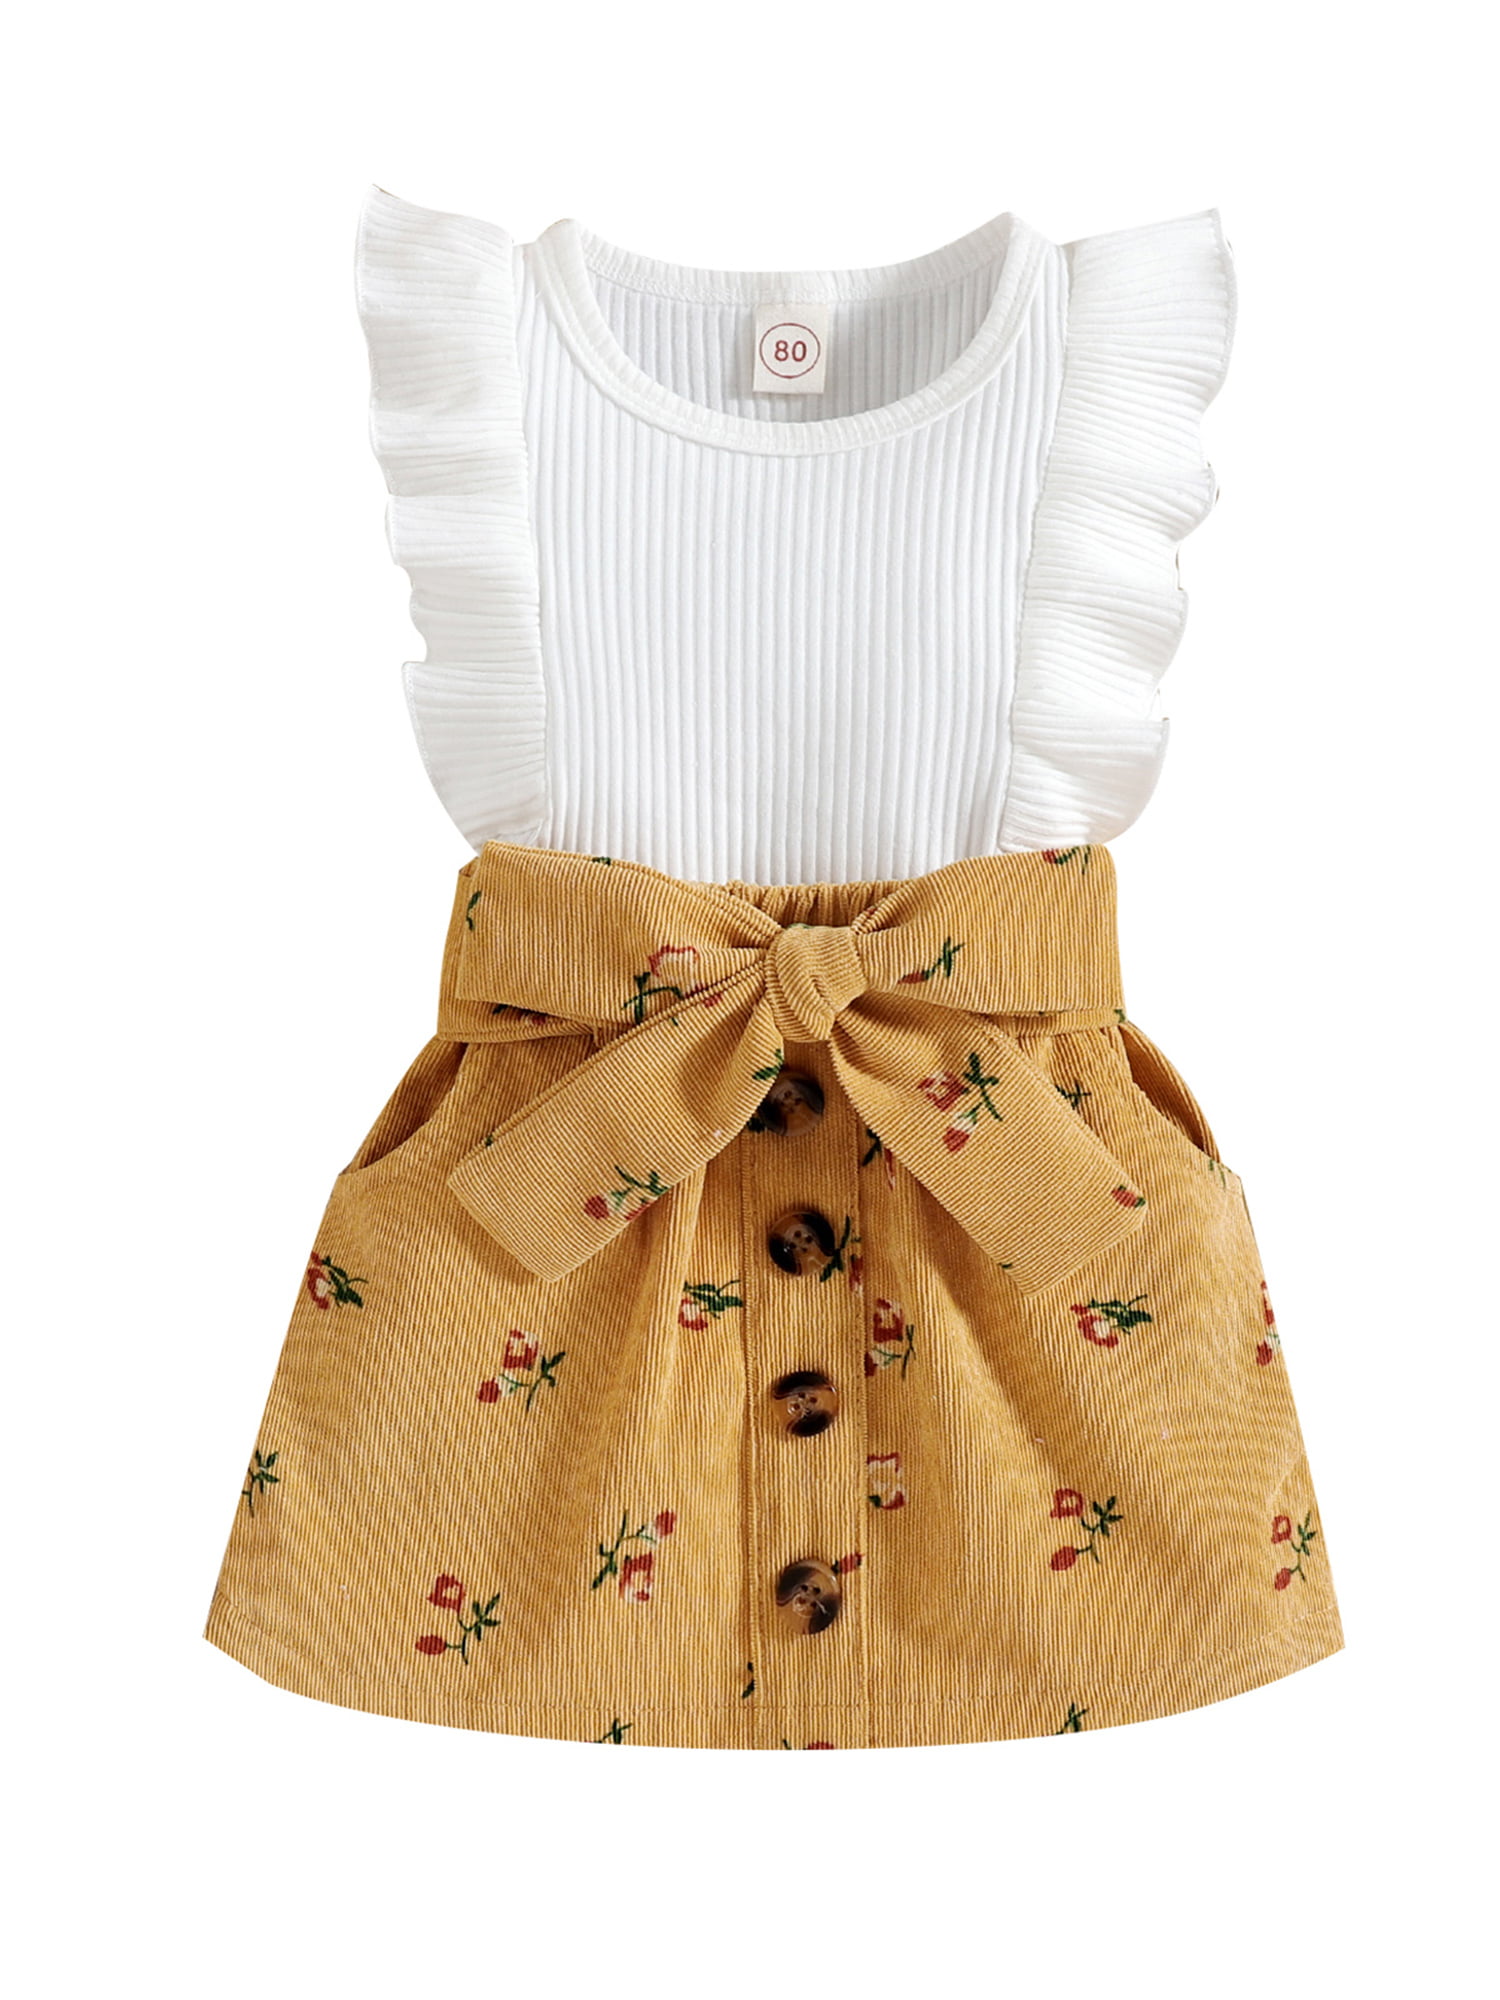 Zara baby girl summer floral dress frilled sleeves 12-18 mths,18-24 mths,2-3year 